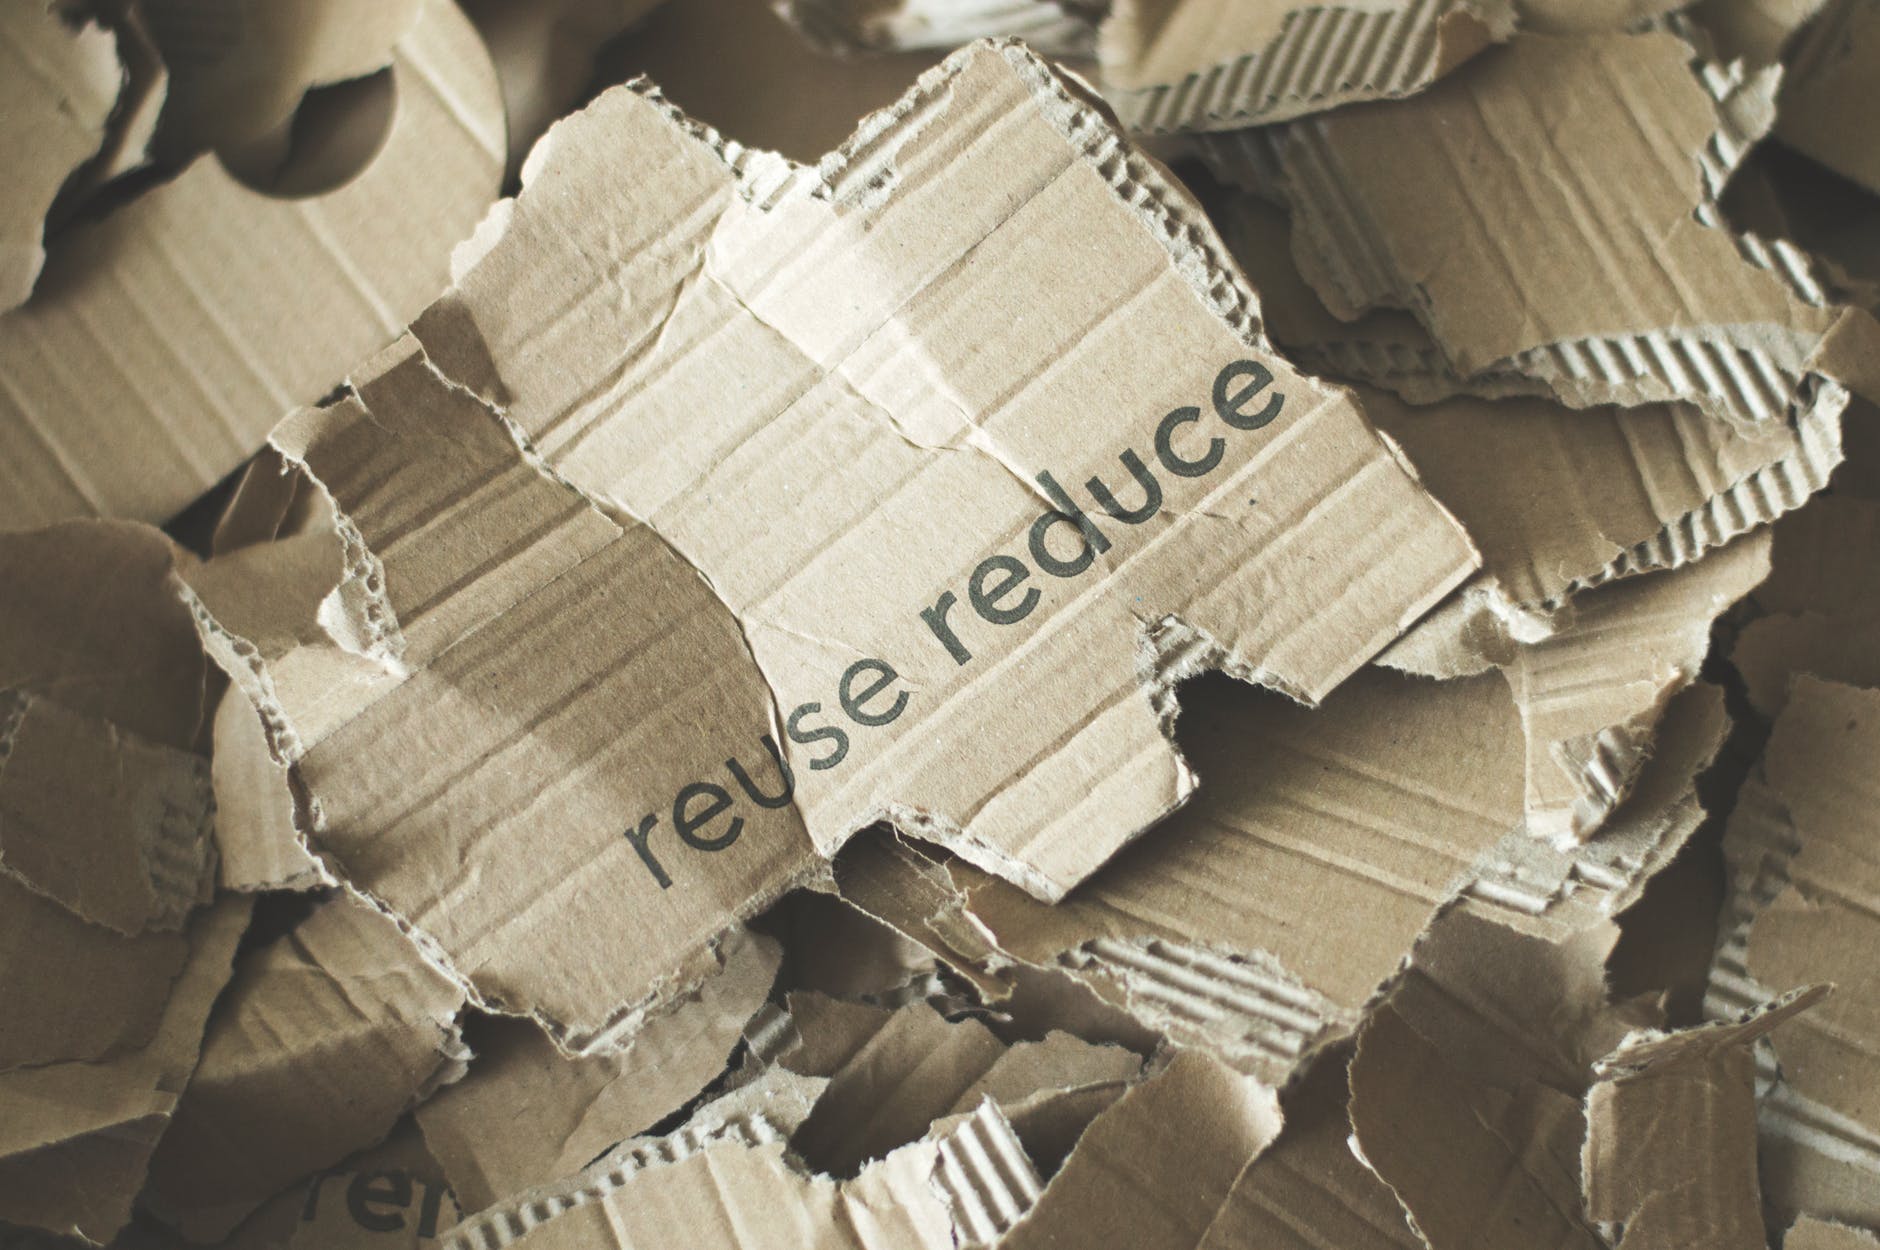 reuse reduce